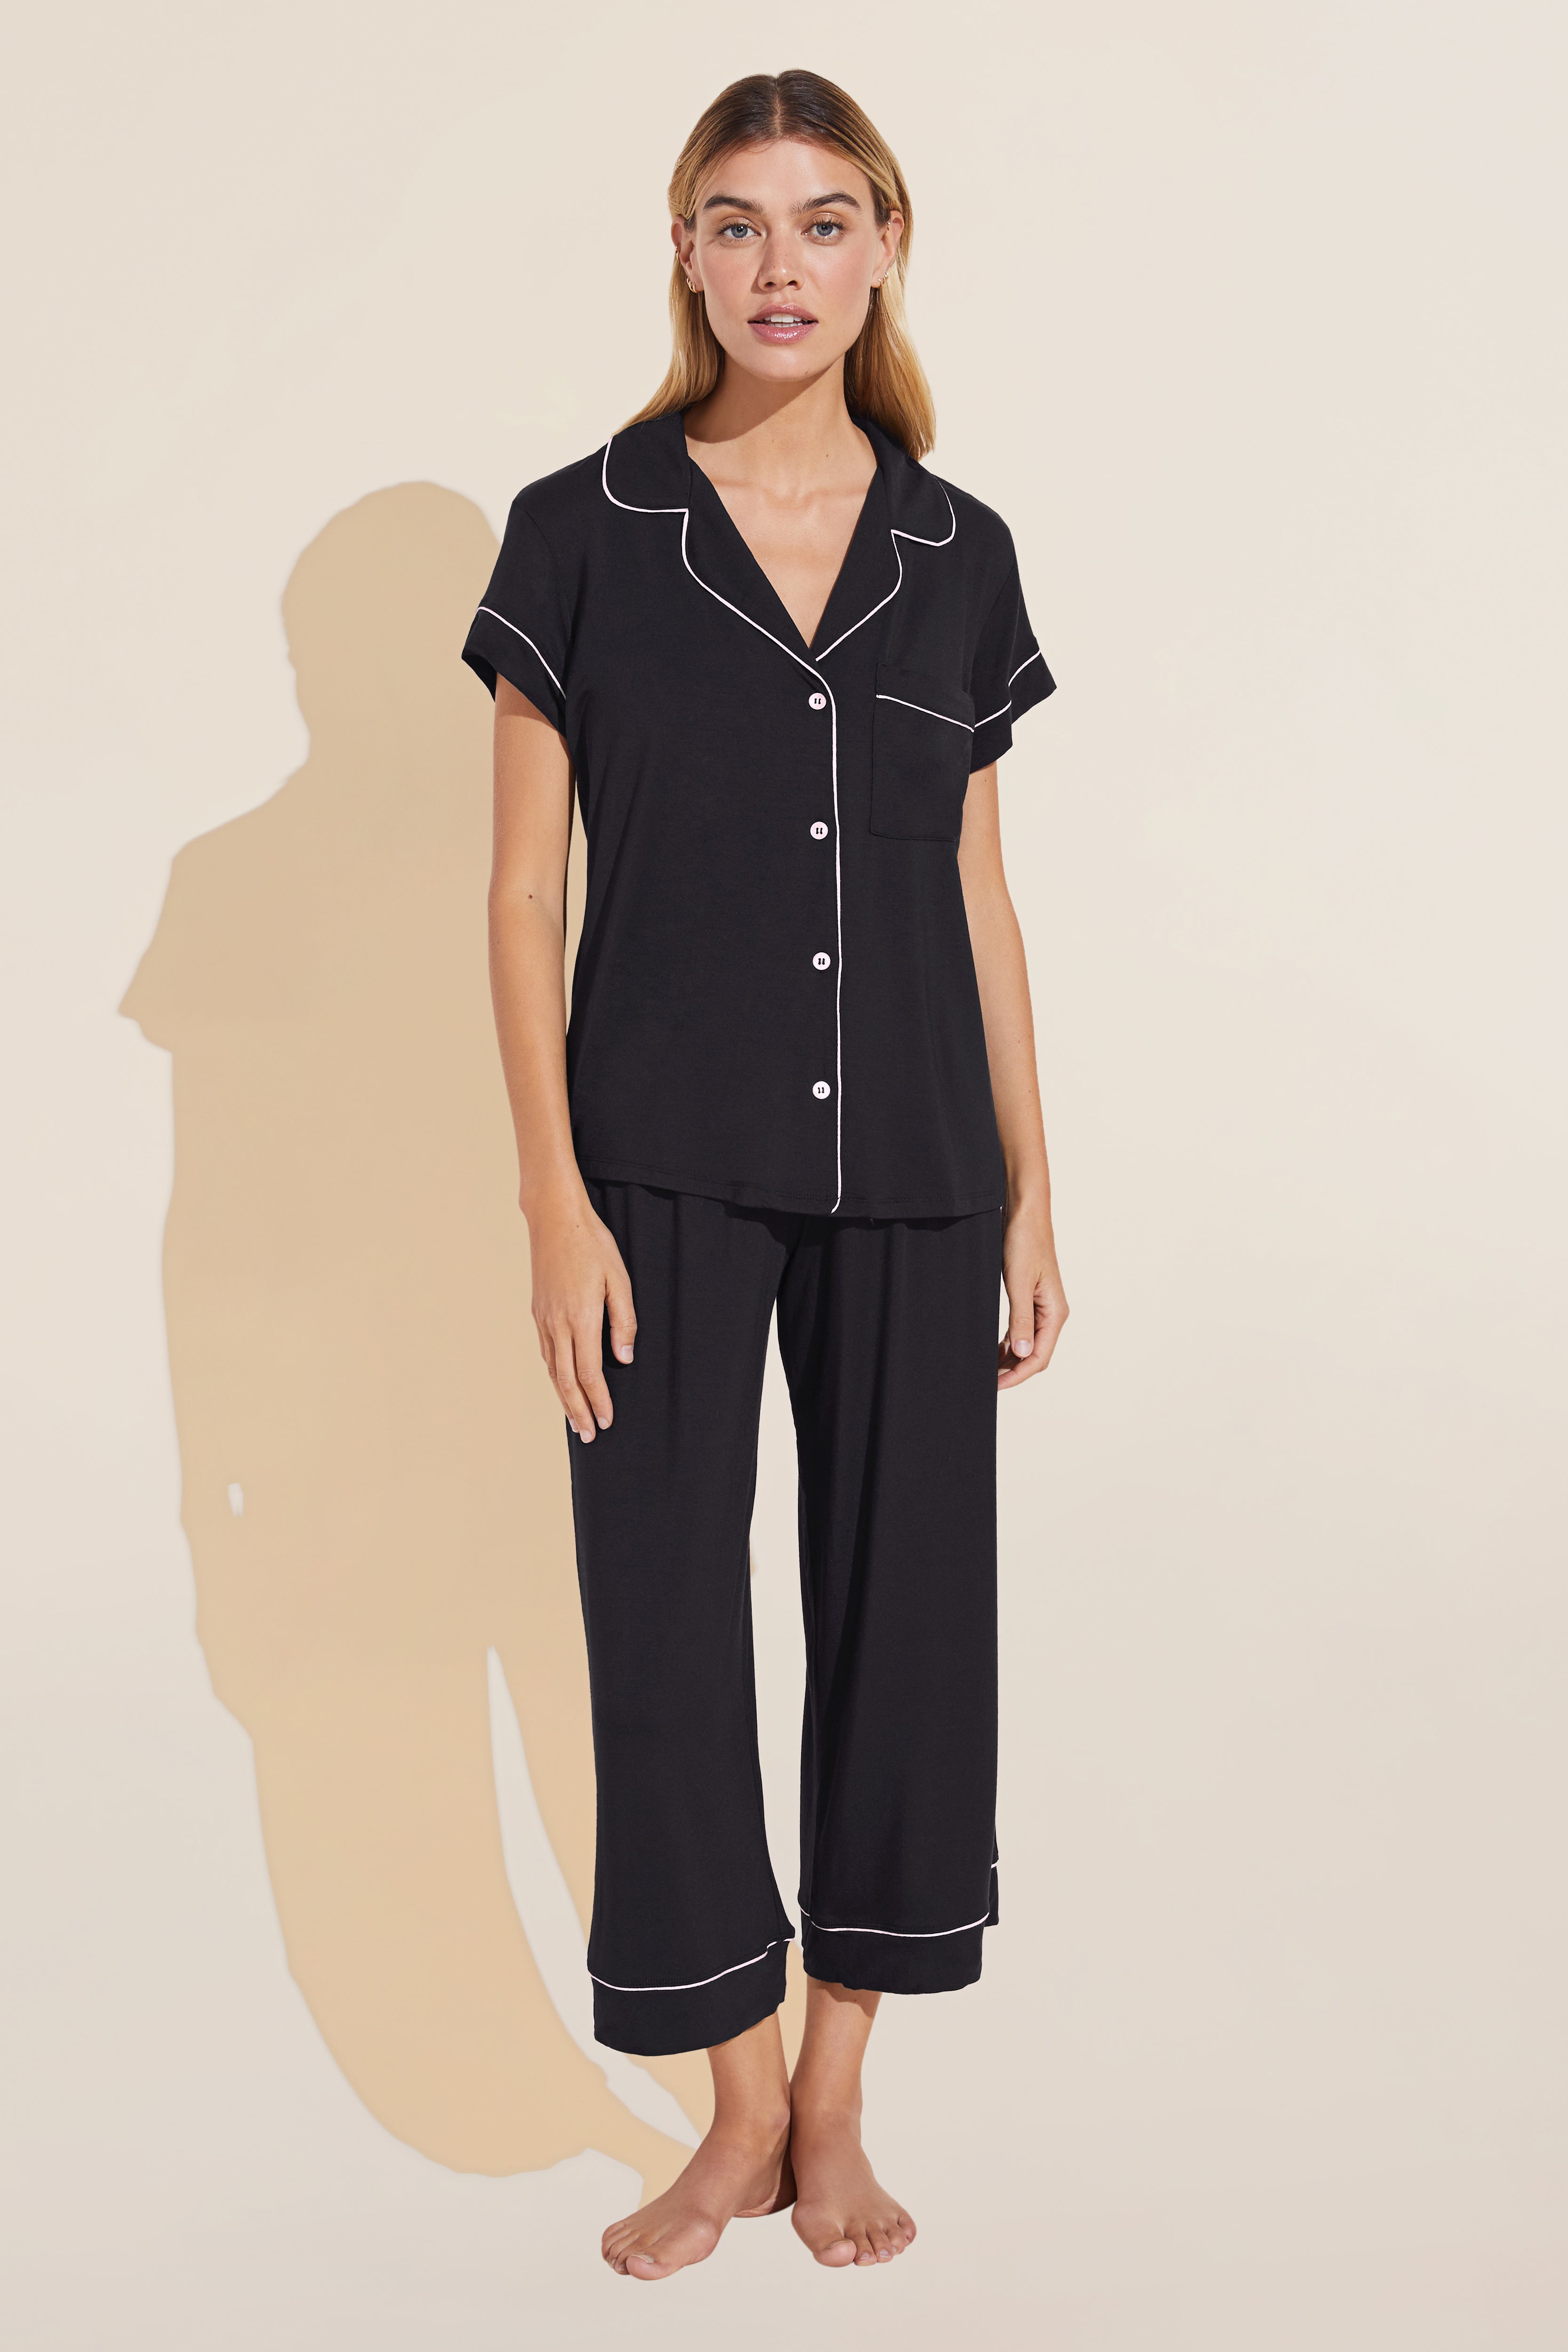 Gisele TENCEL™ Modal Short Sleeve Cropped PJ Set - Black/Sorbet Pink